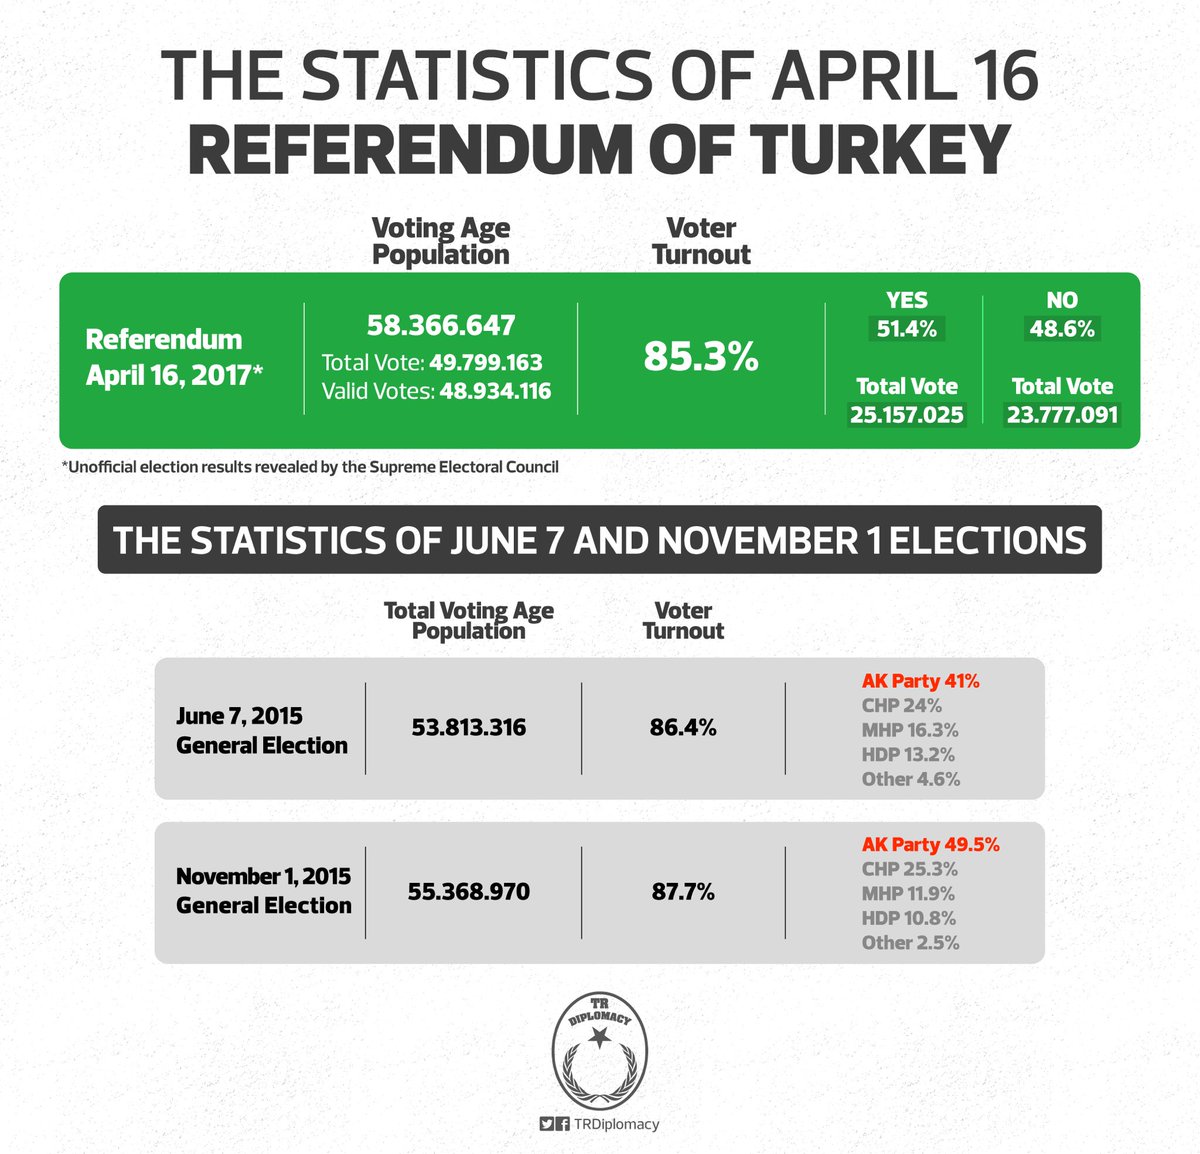 Turkey's Democracy Victory: April 16 Referendum and Voter Turnout